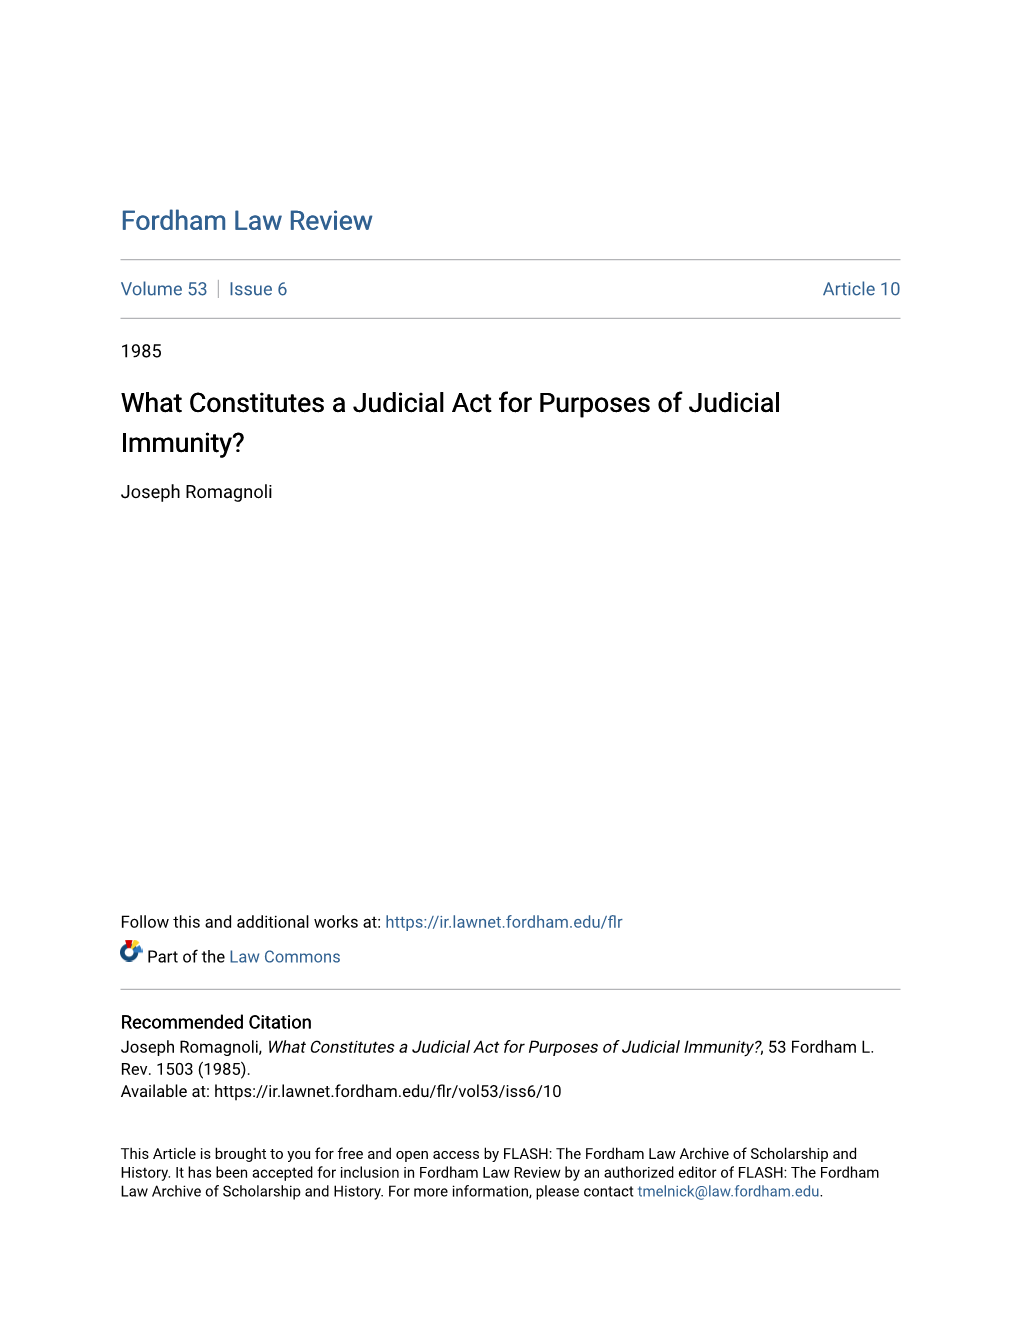 What Constitutes a Judicial Act for Purposes of Judicial Immunity?